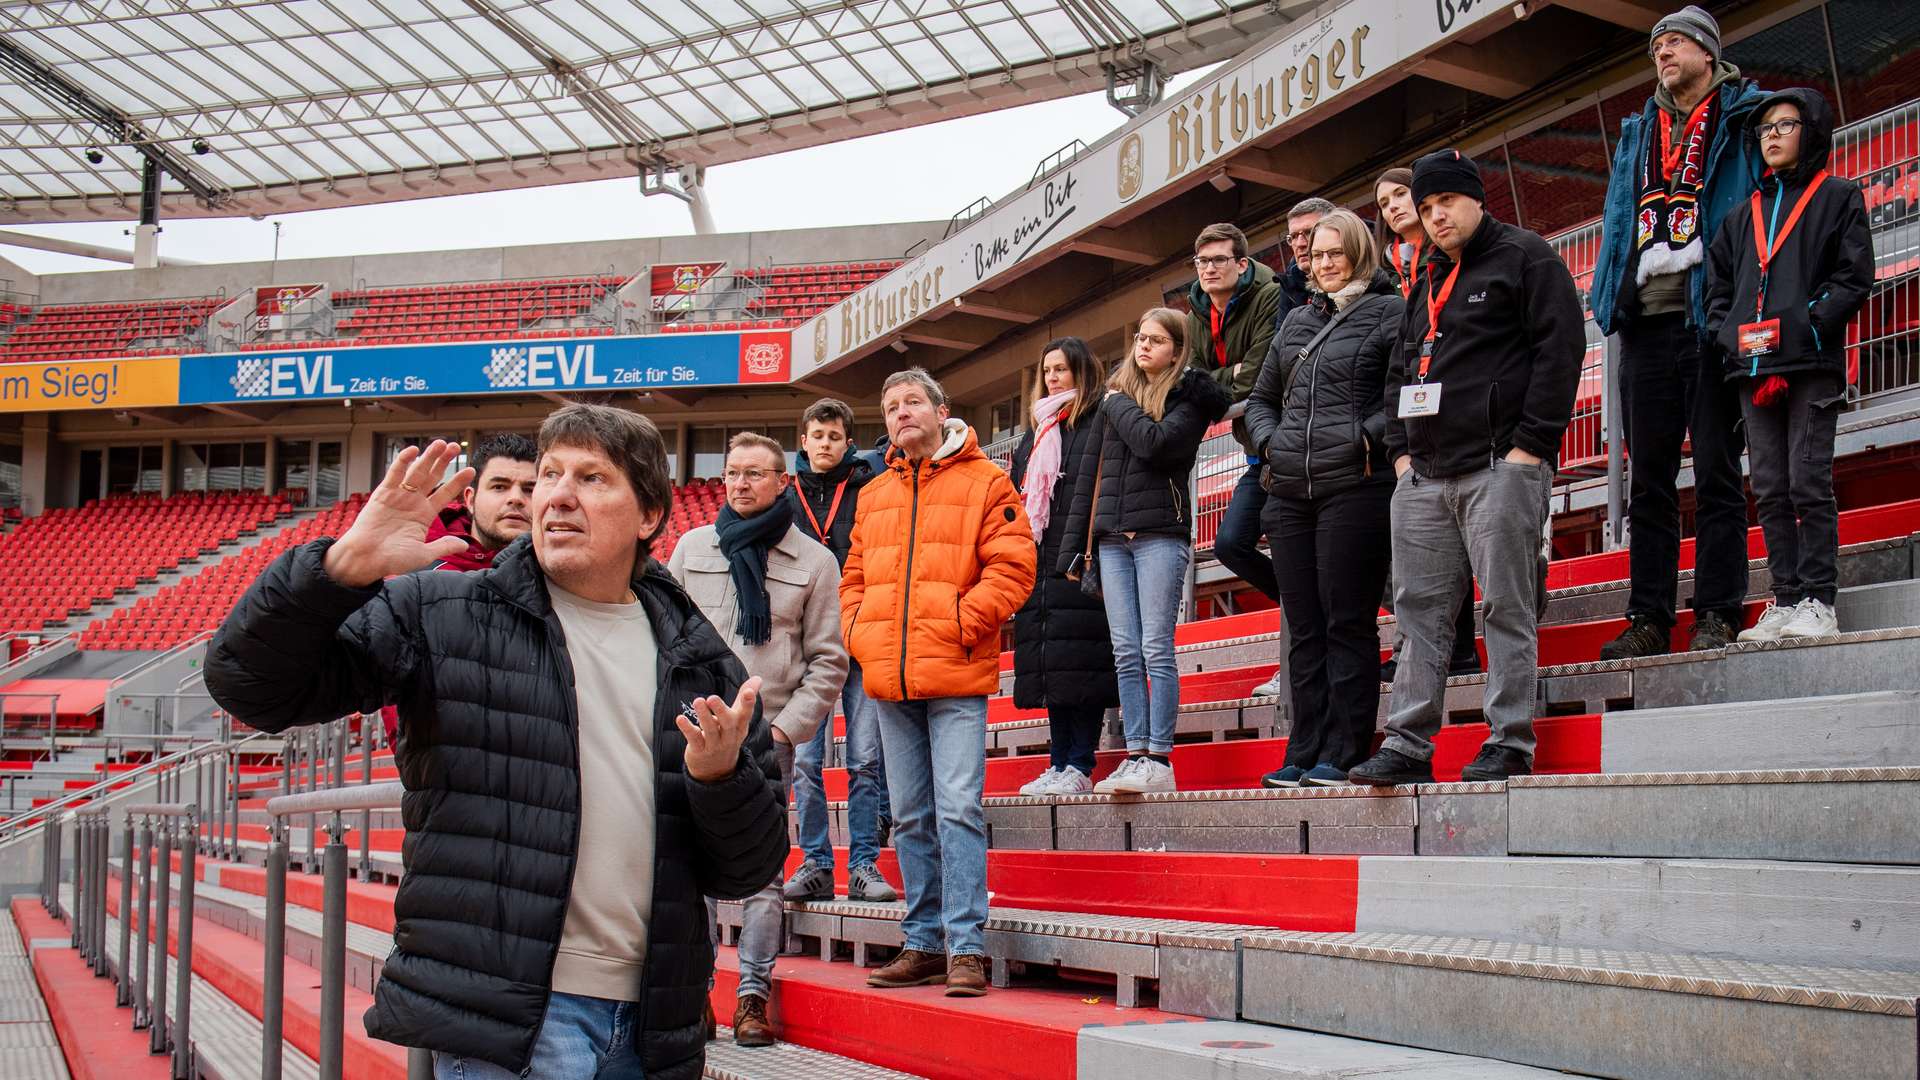 Rüdiger Vollborn guides fans through the BayArena